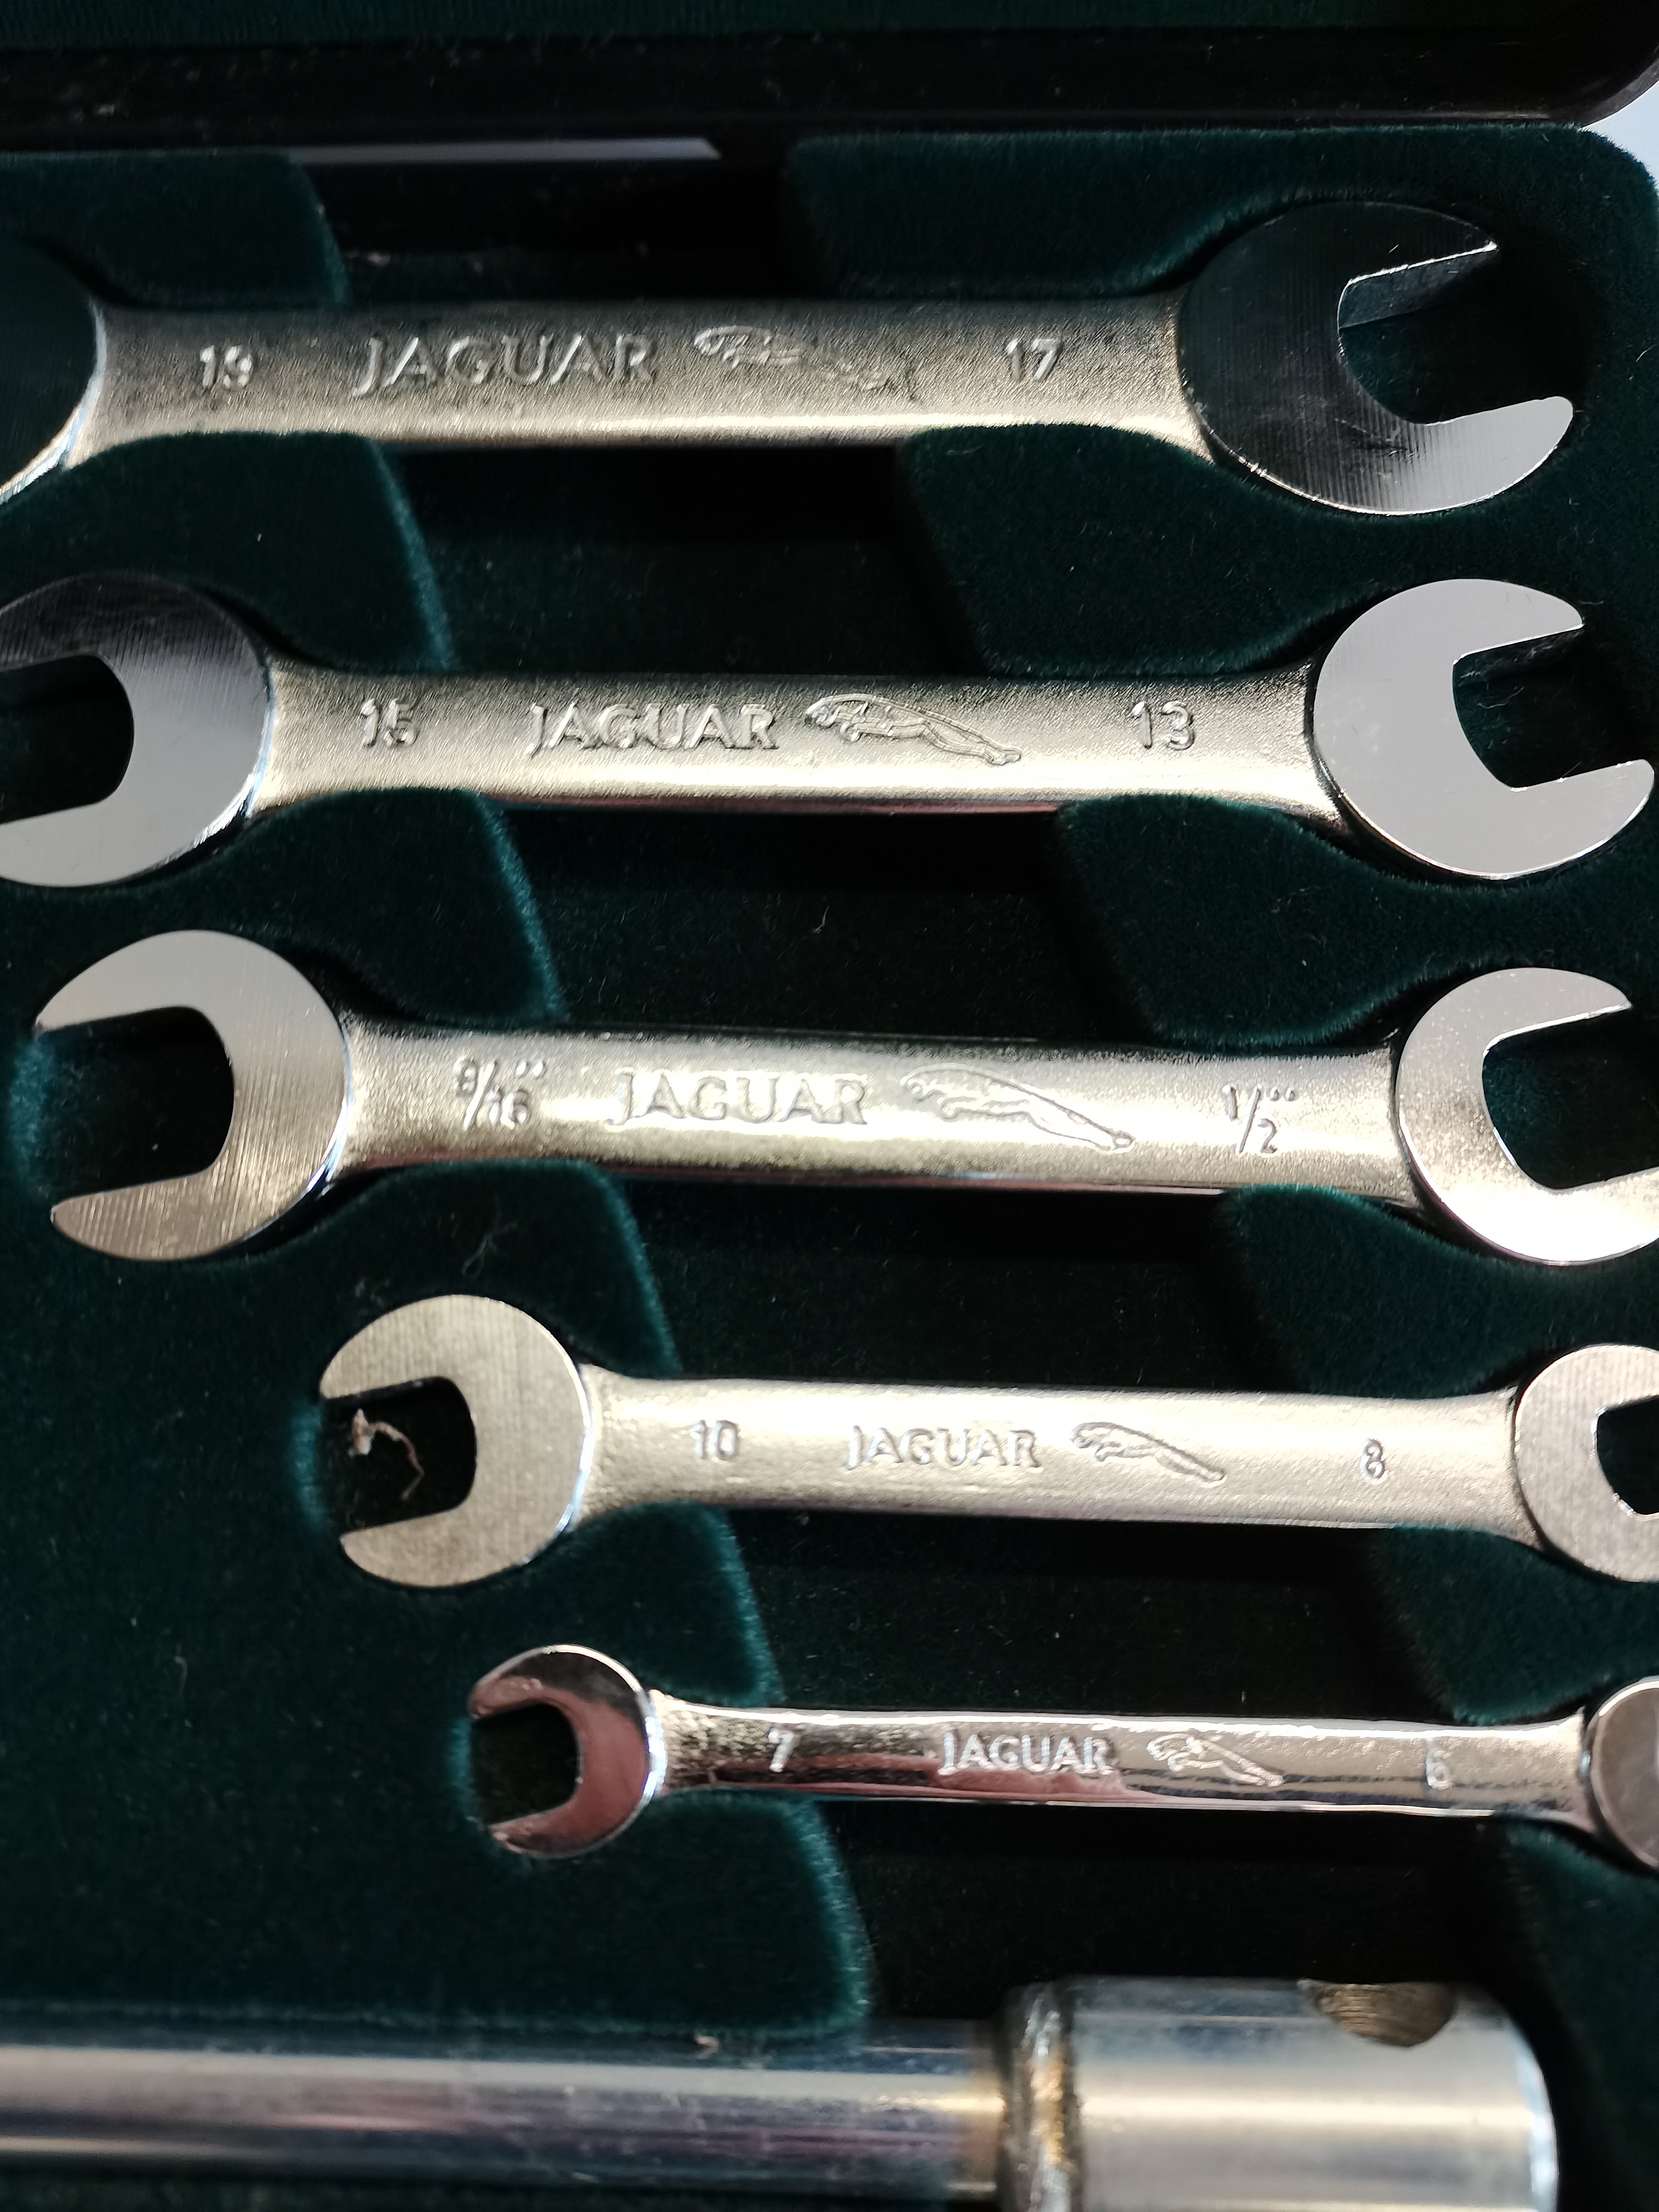 Jaguar Tool Kit - Image 2 of 2